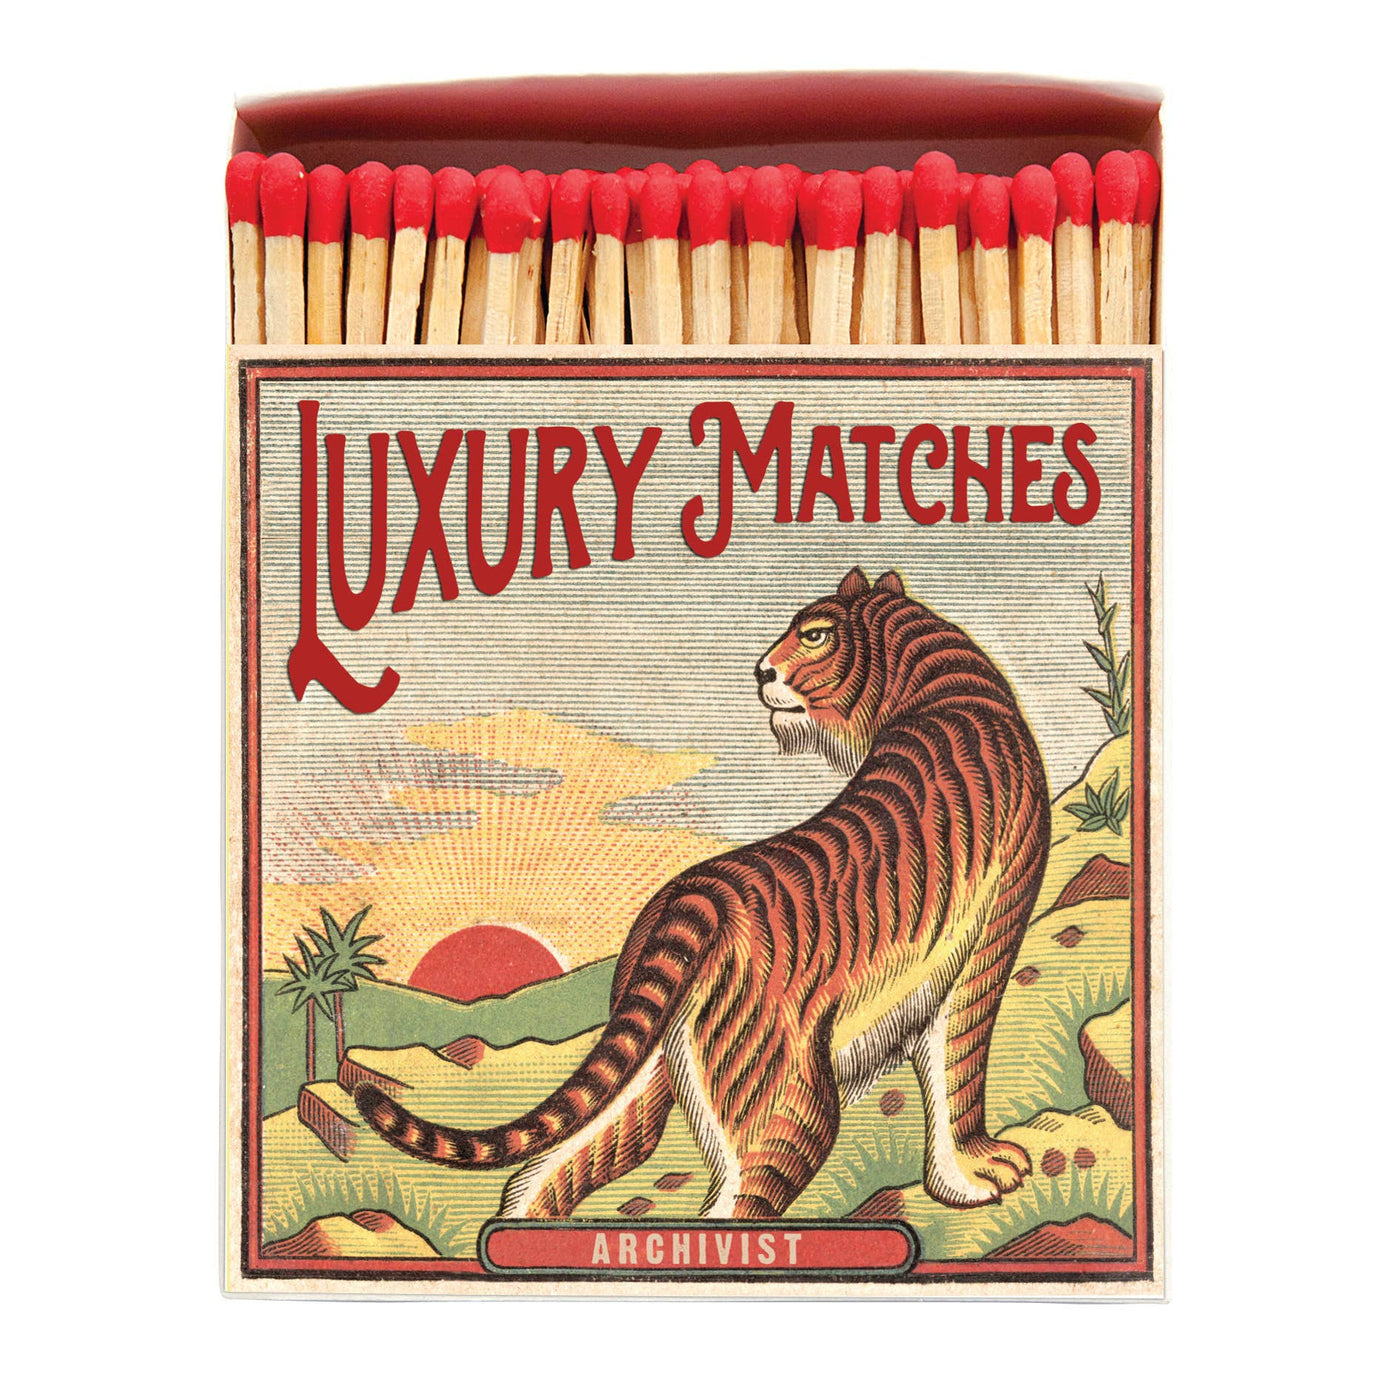 The New Tiger Matchbox